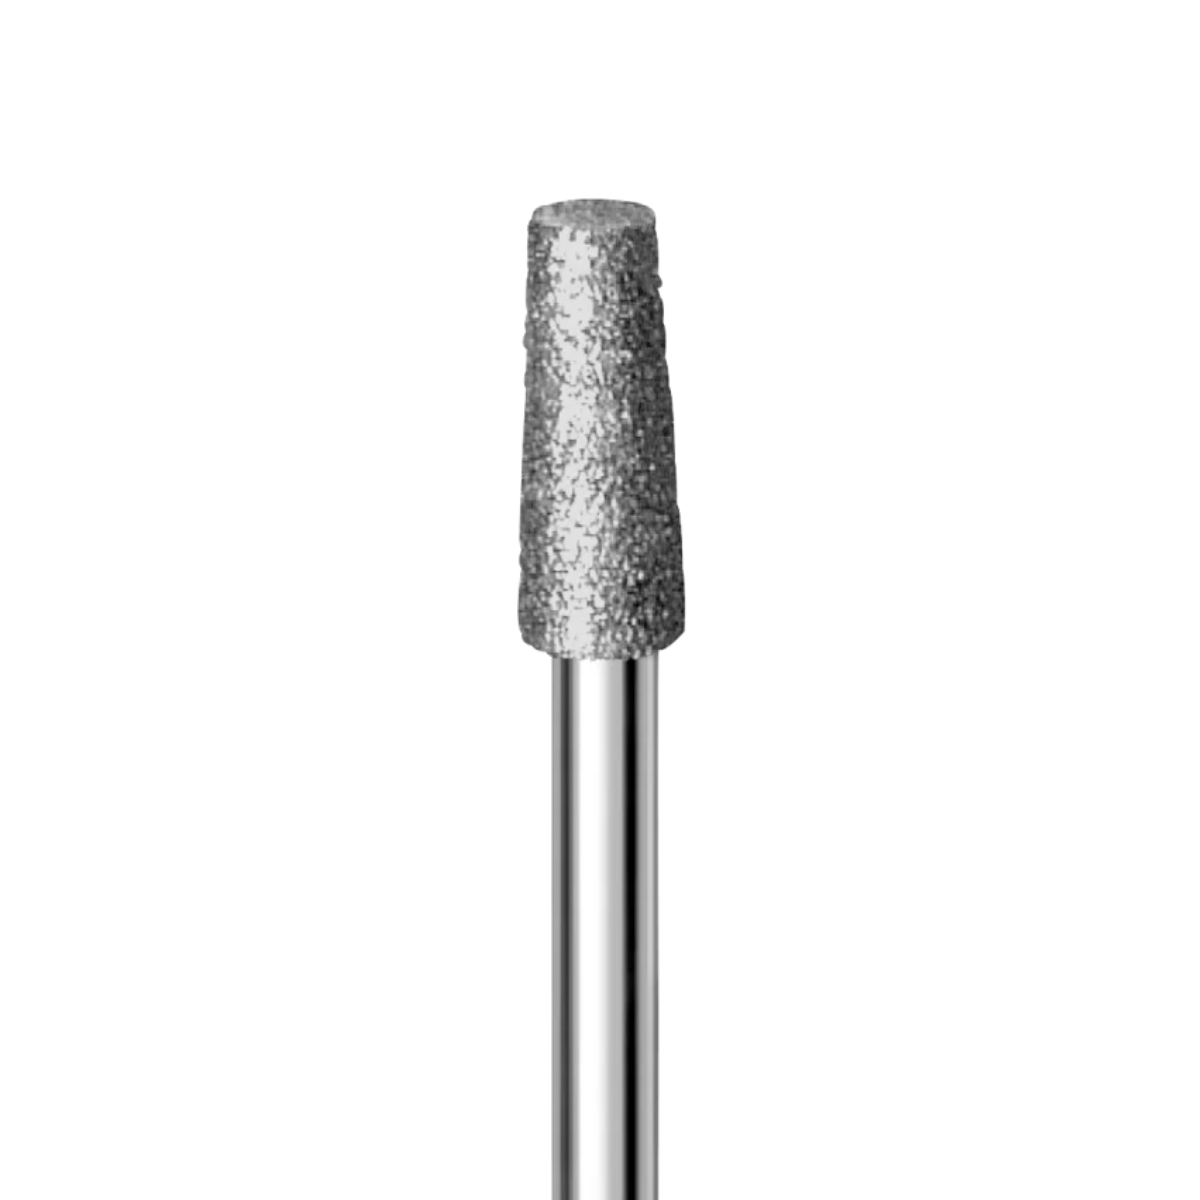 BUSCH Dimanta frēze 4 mm, vidēji rupja,  20 000 apgr./min., 1 gab.